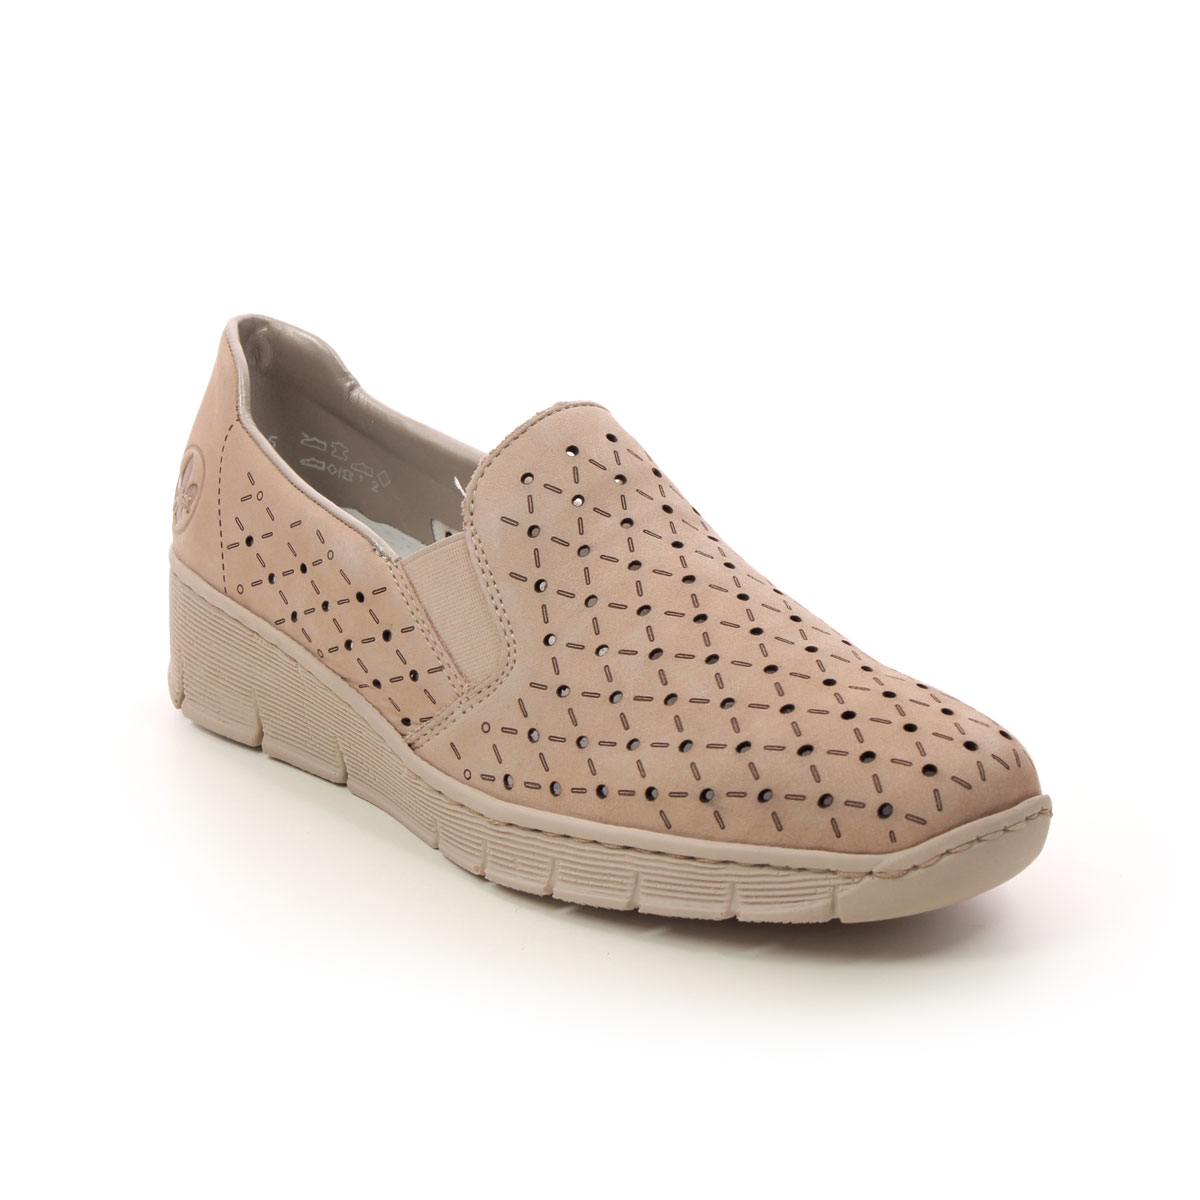 Rieker 53795-60 Beige nubuck Womens Comfort Slip On Shoes in a Plain Leather in Size 40